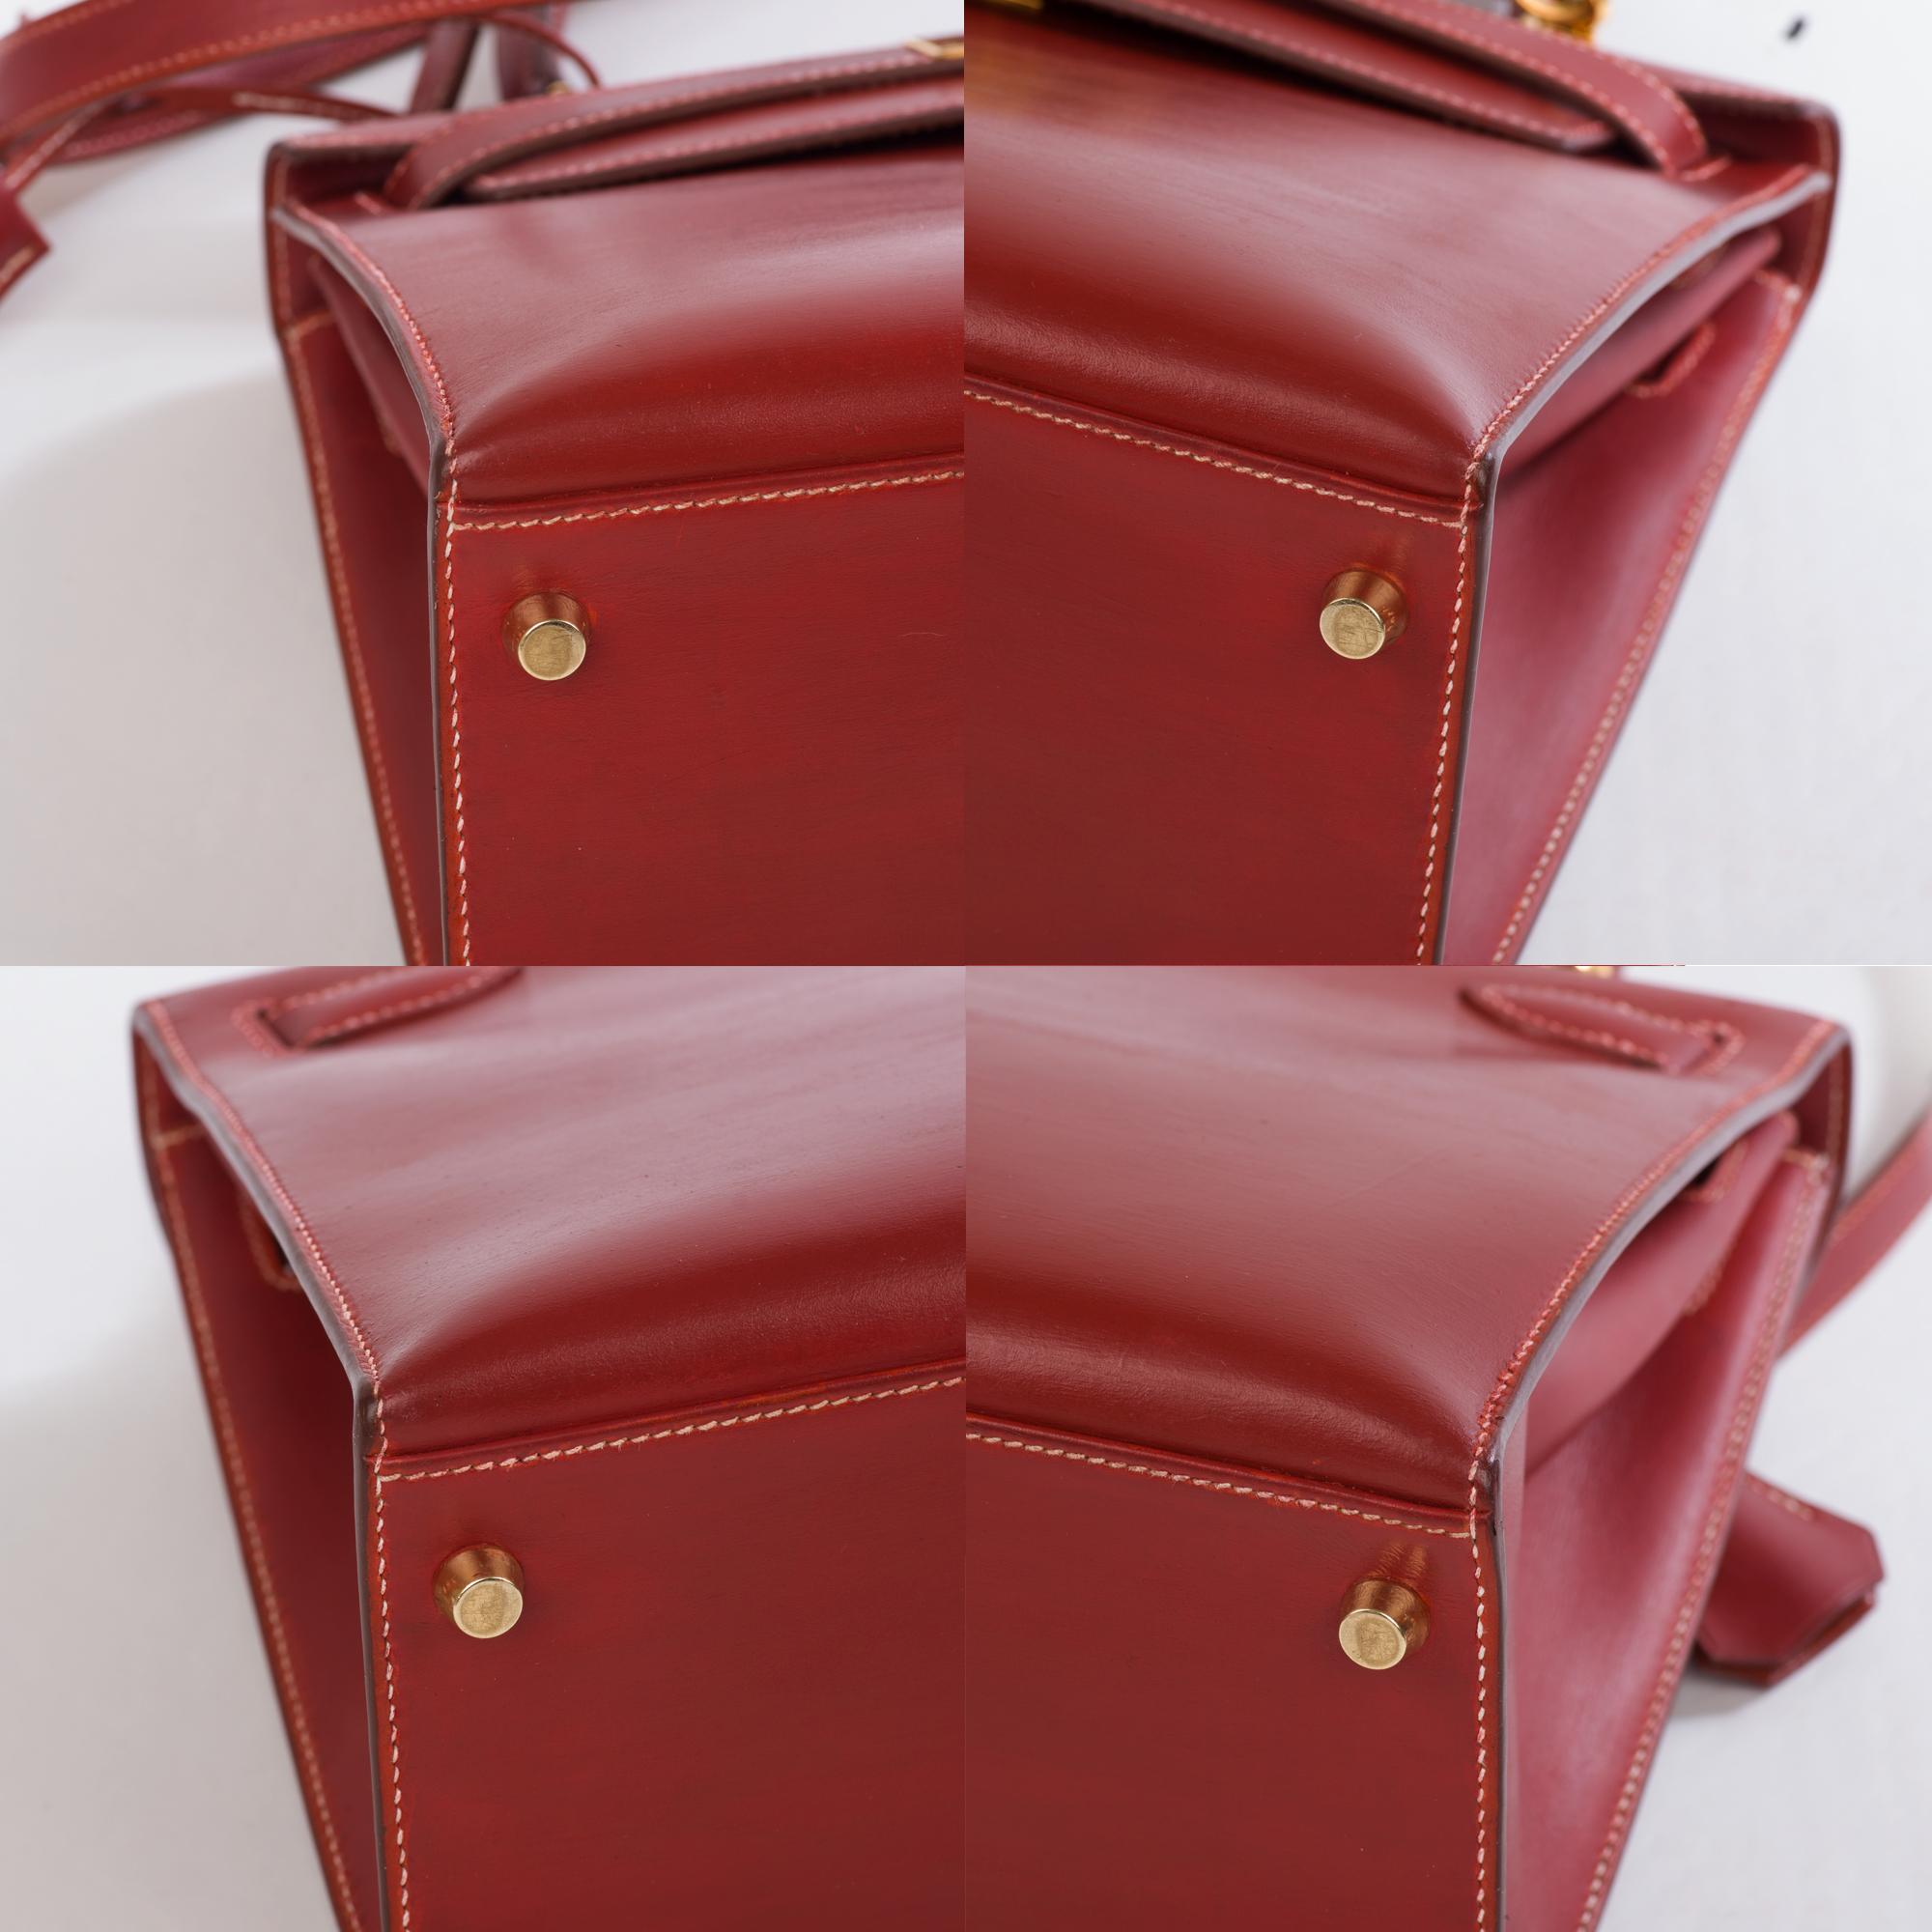 Hermes kelly 28cm Red Brick box Leather Handbag 1